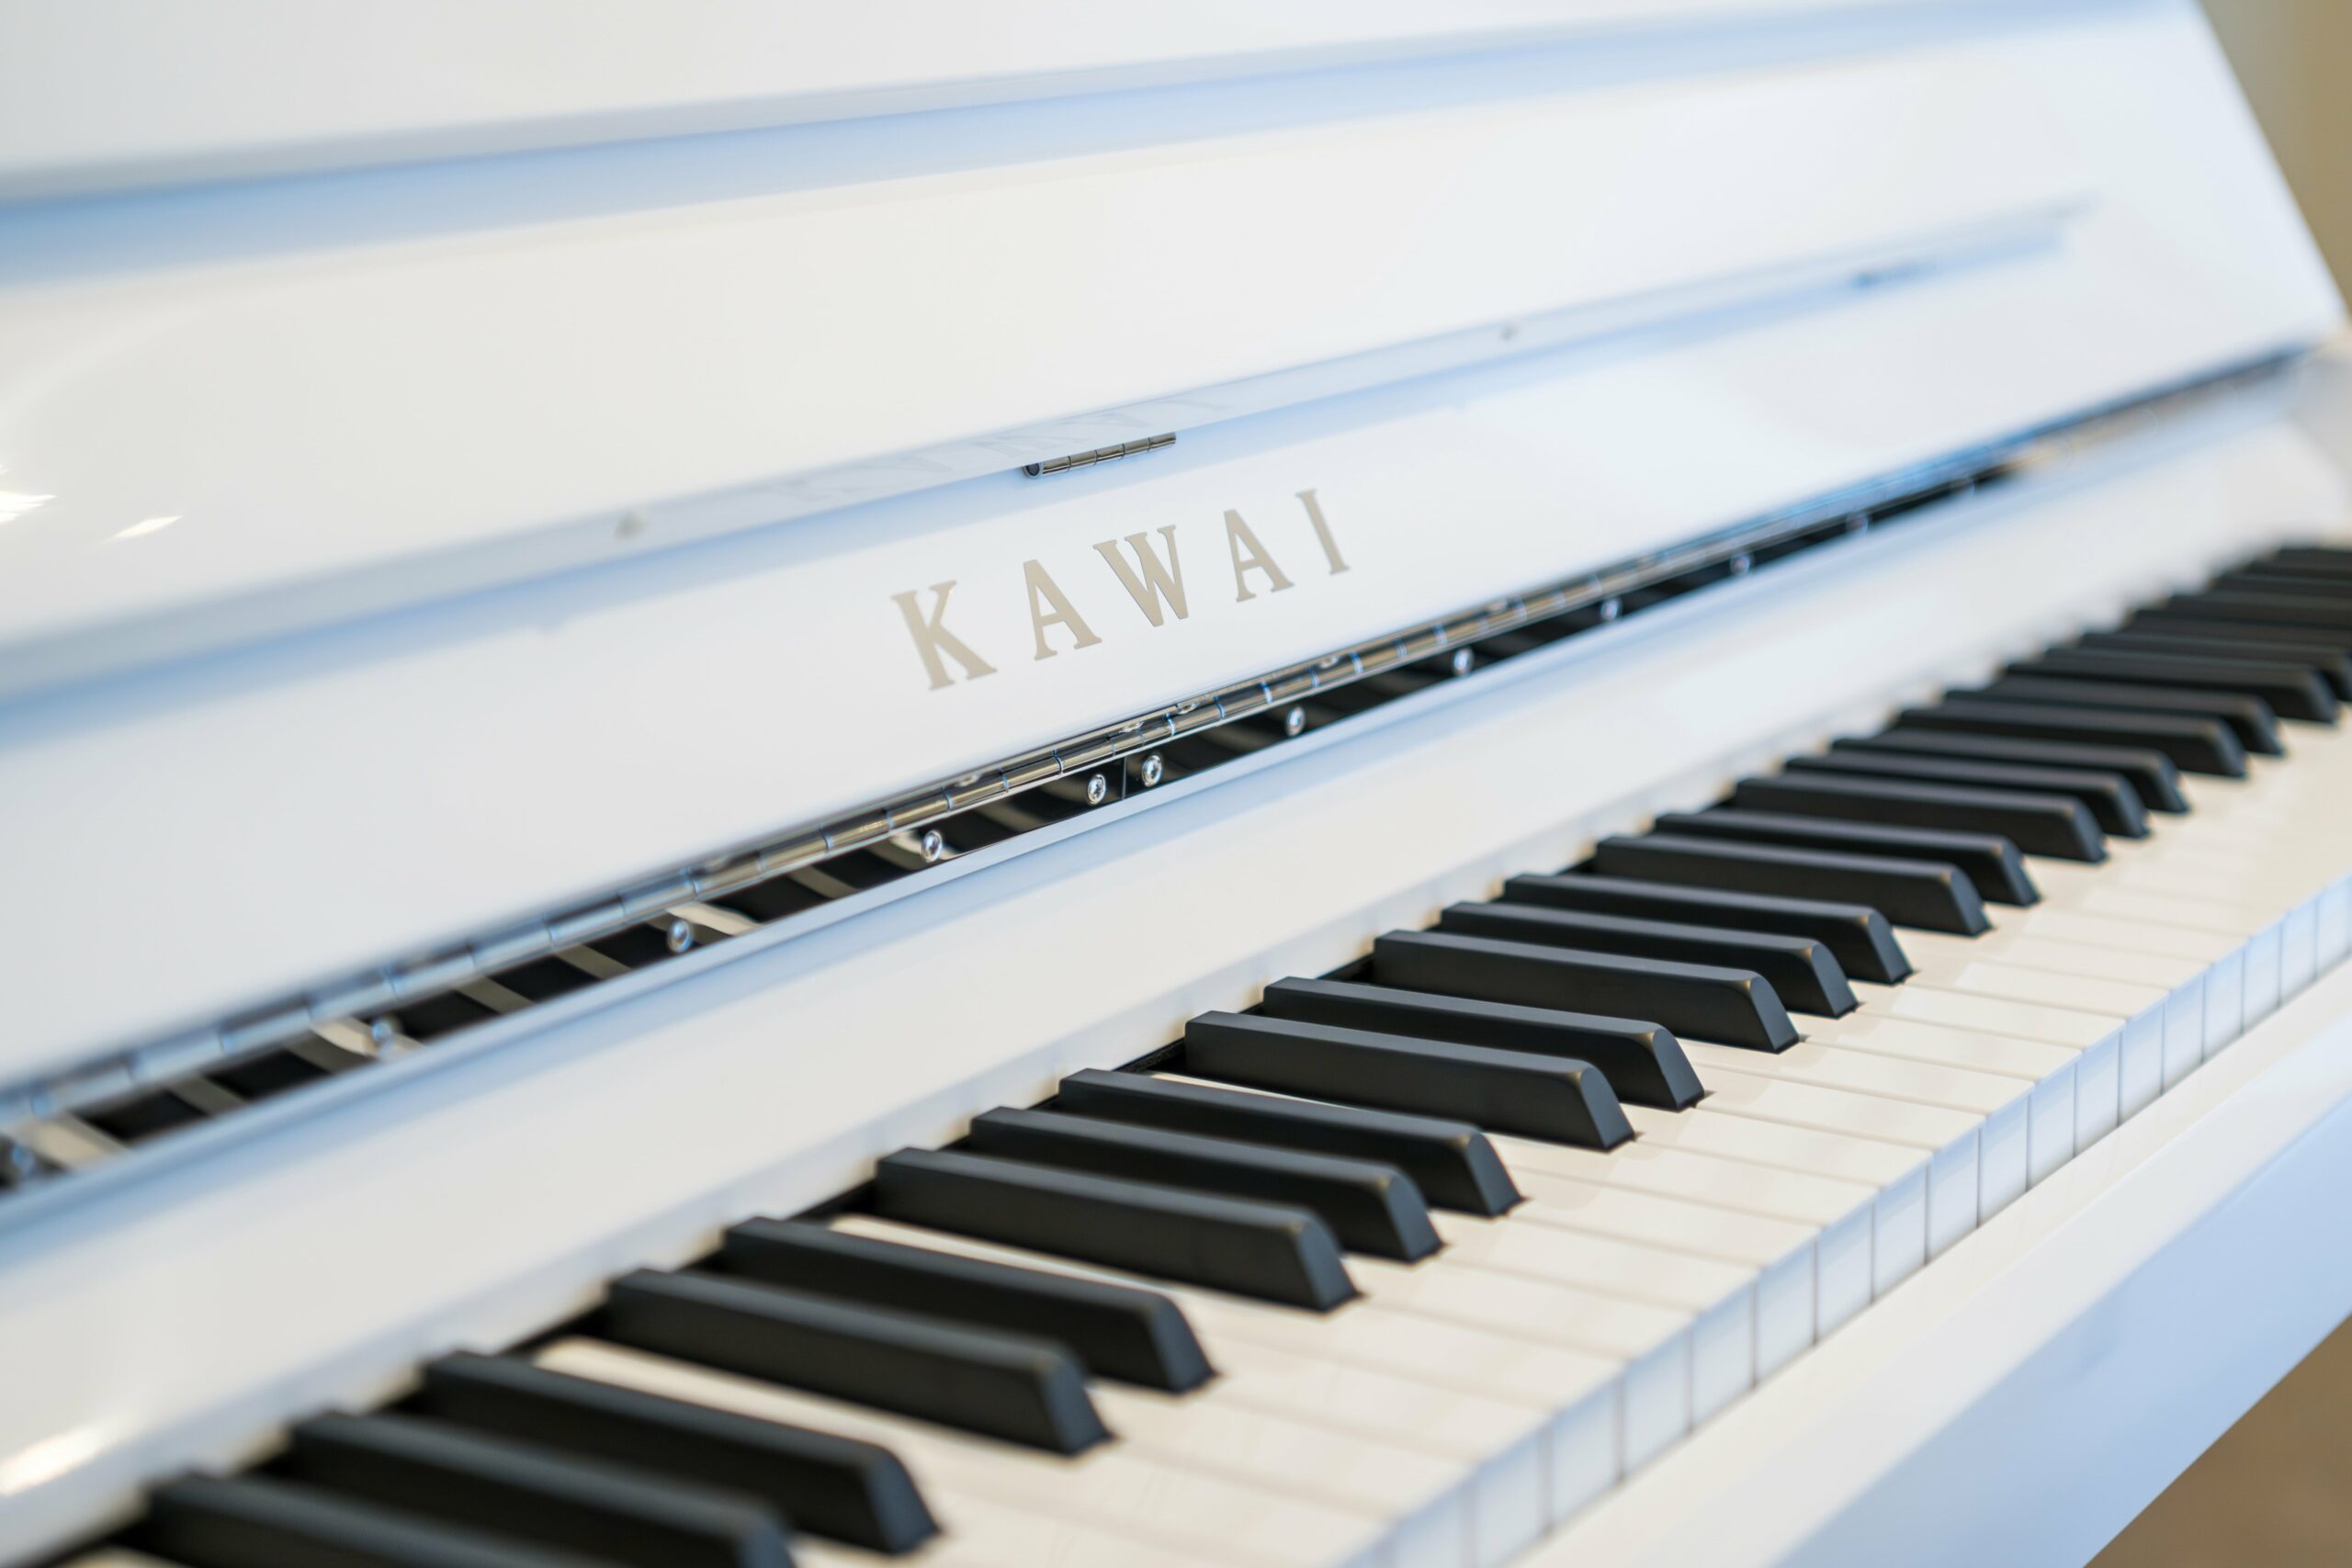 Kawai K300 polished white with silver fittings keyboard